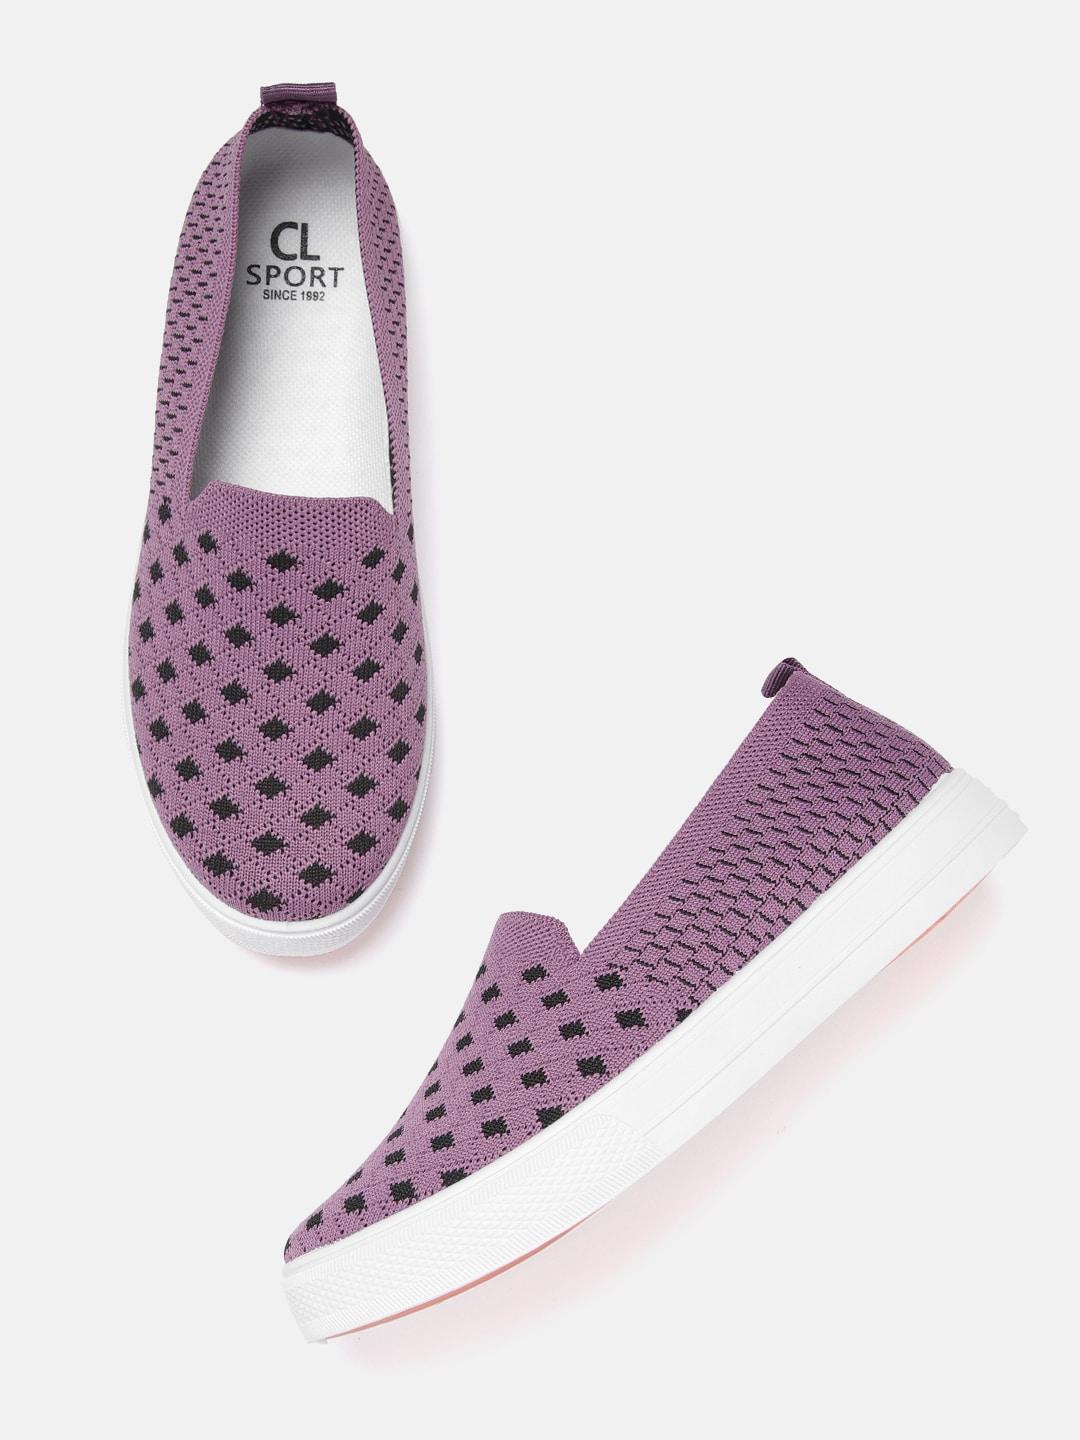 carlton london sports women lavender & black geometric woven design slip-on sneakers